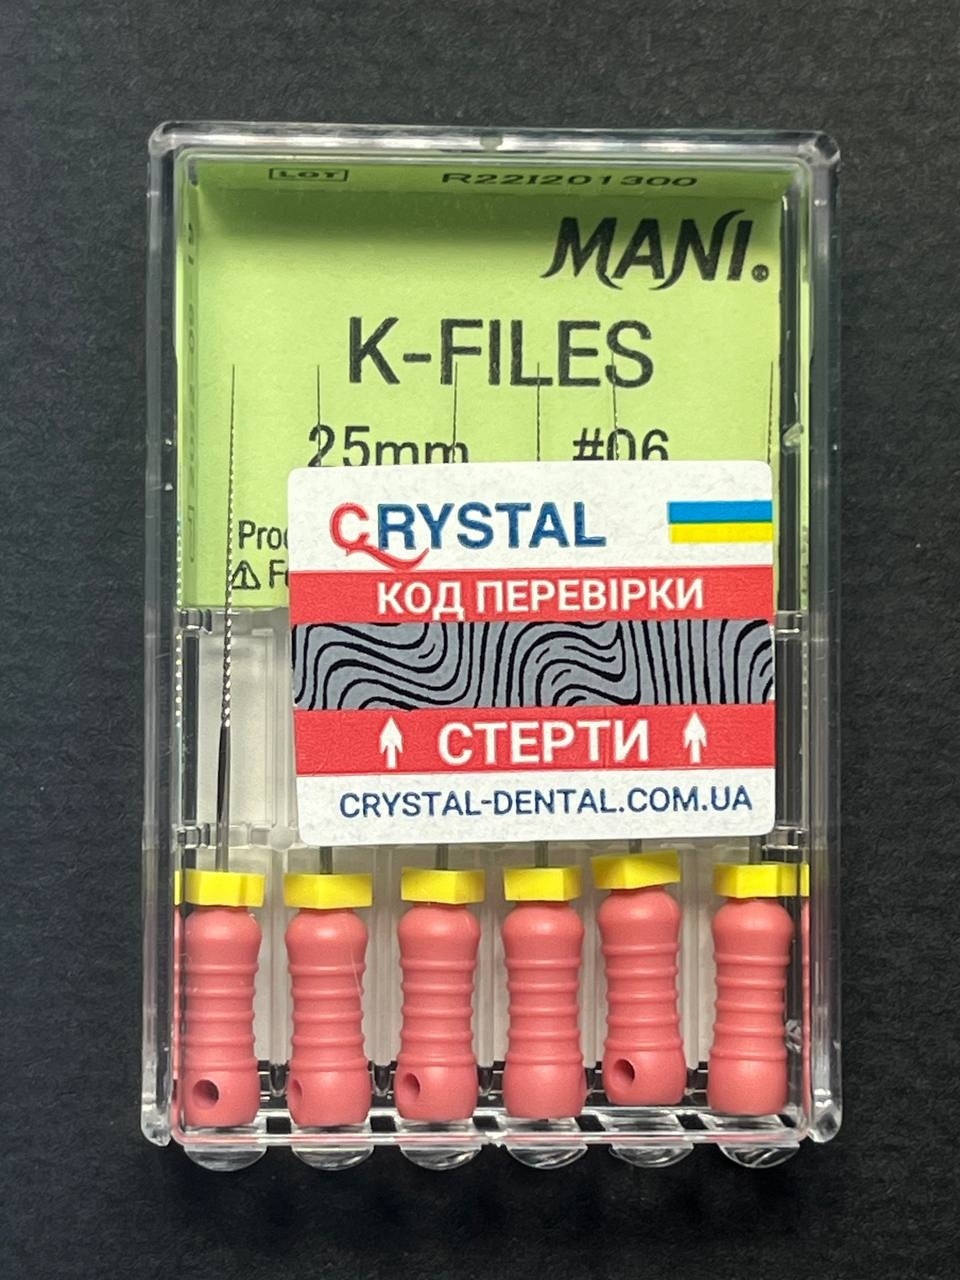 К-файли (K-files) MANI (6 шт.) 06 (25 мм)